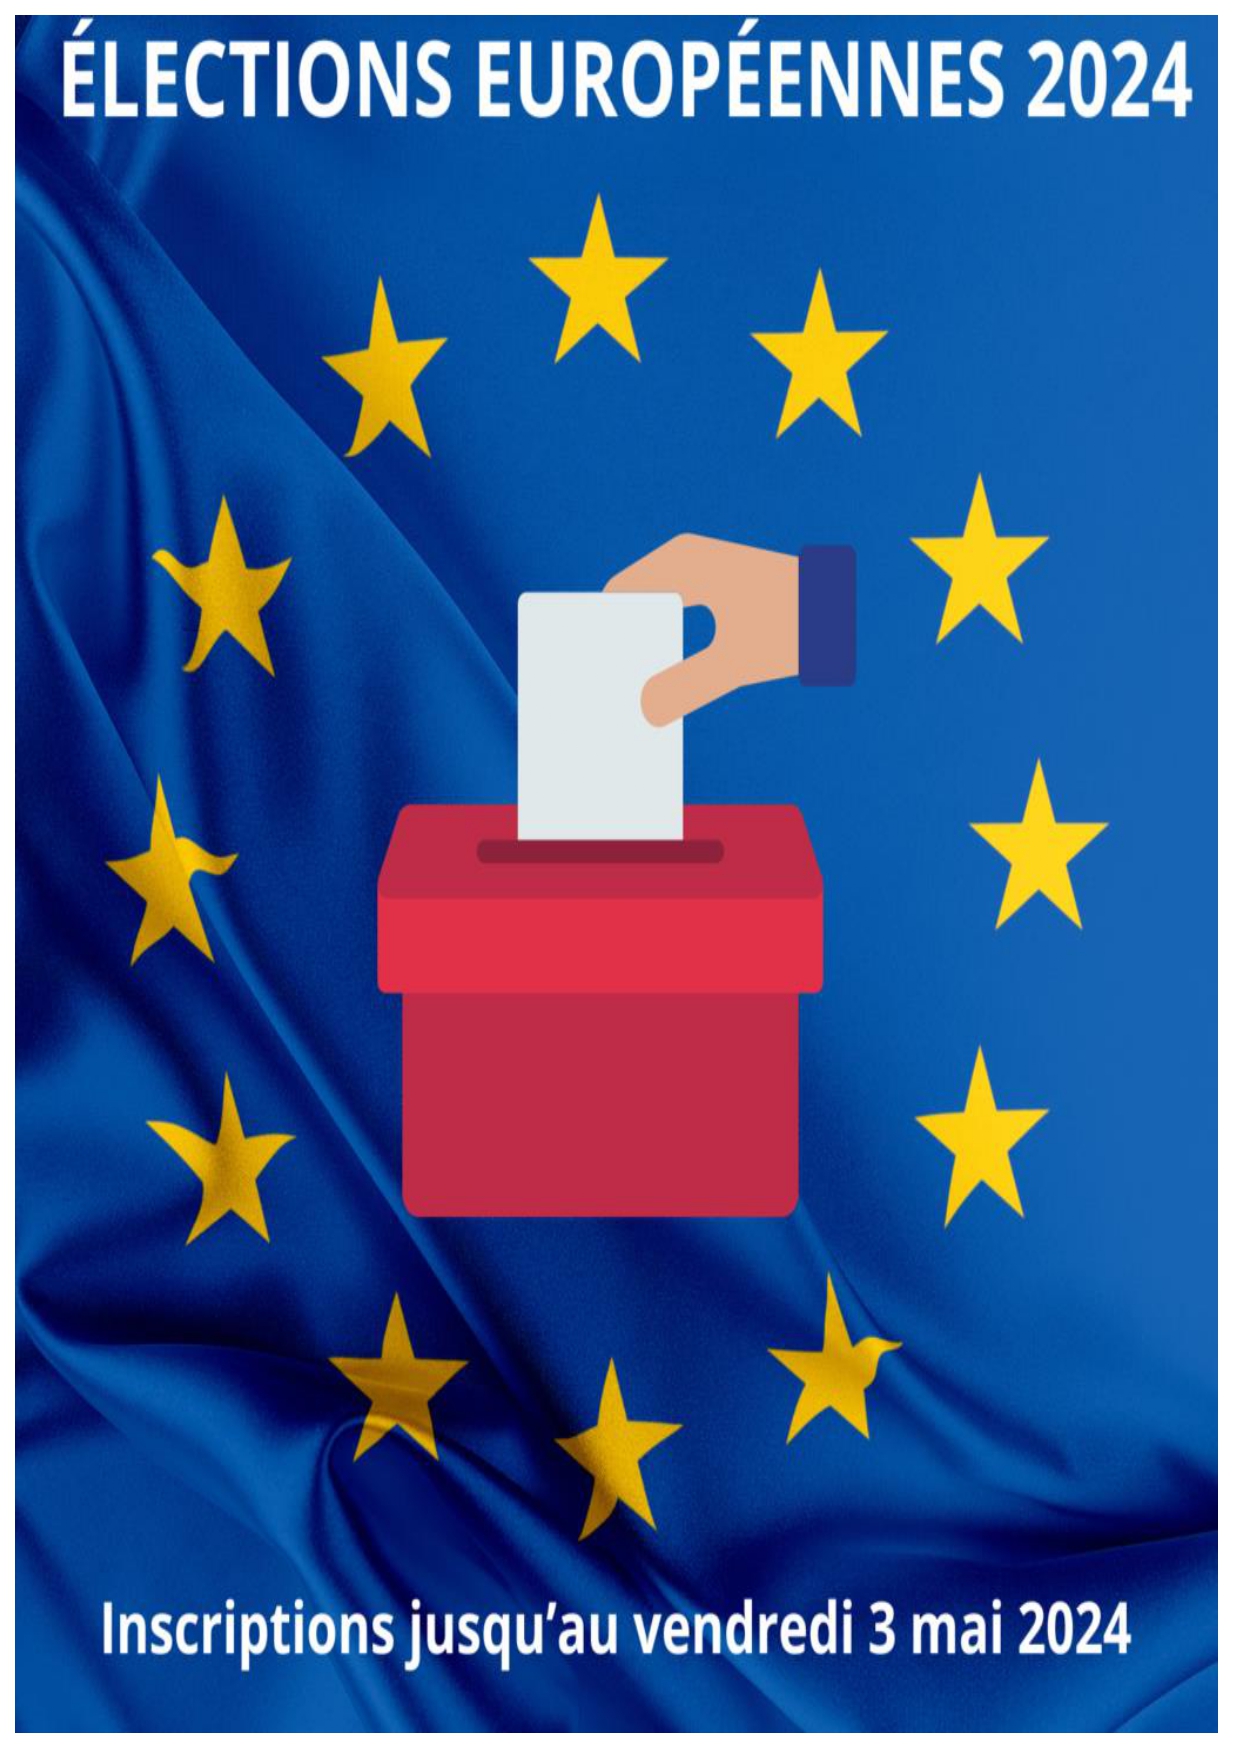 AFFICHAGE ELECTION EUROPEENNE 2024_page-0001.jpg